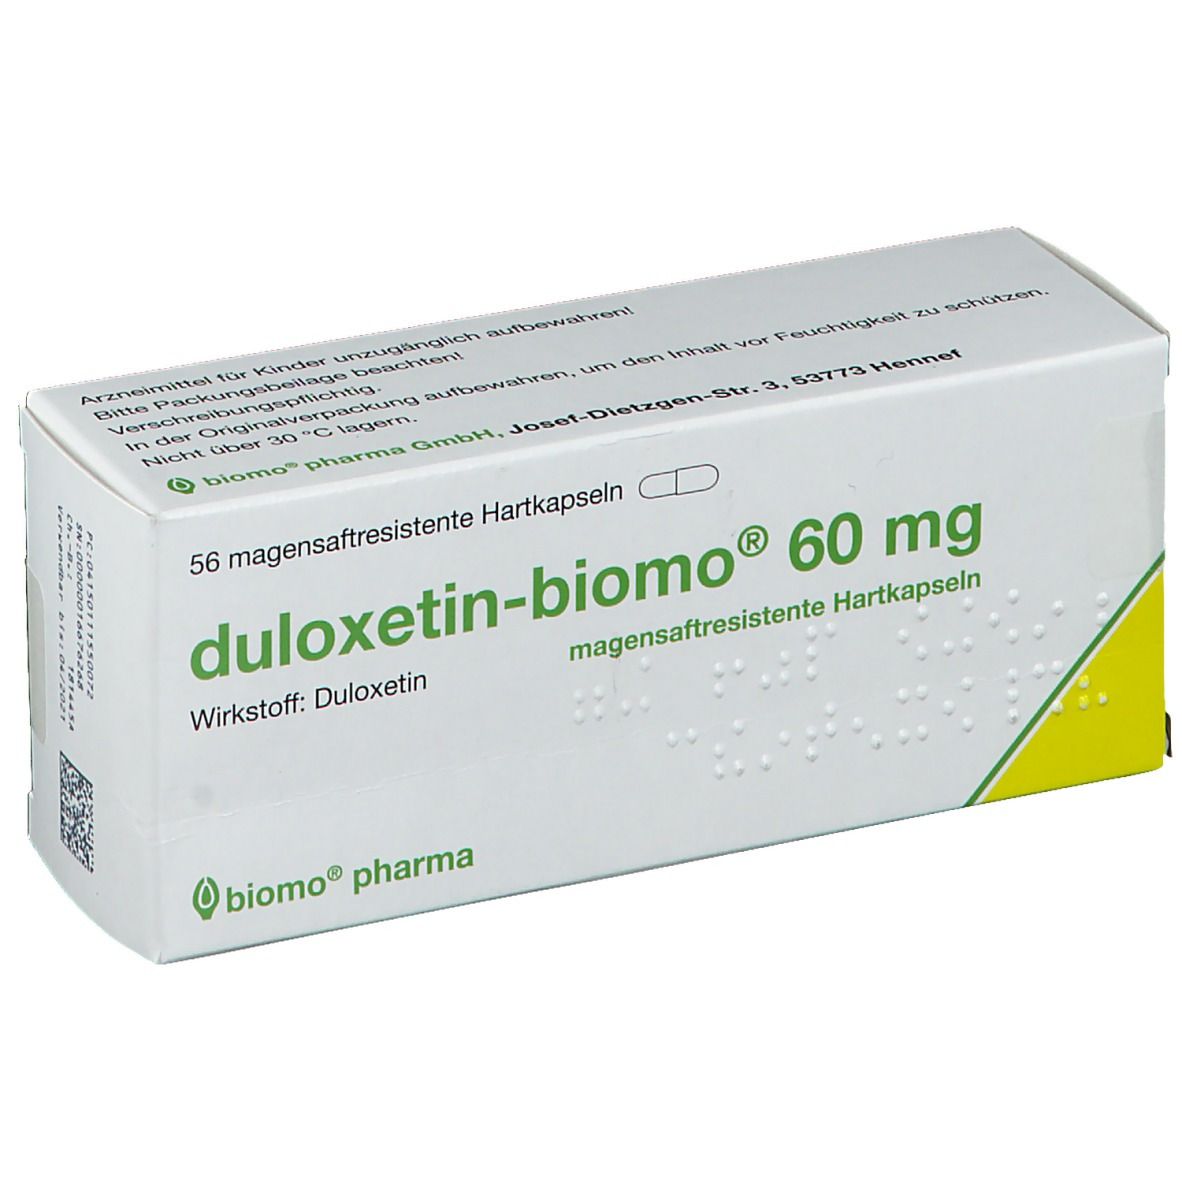 duloxetin-biomo® 60 mg